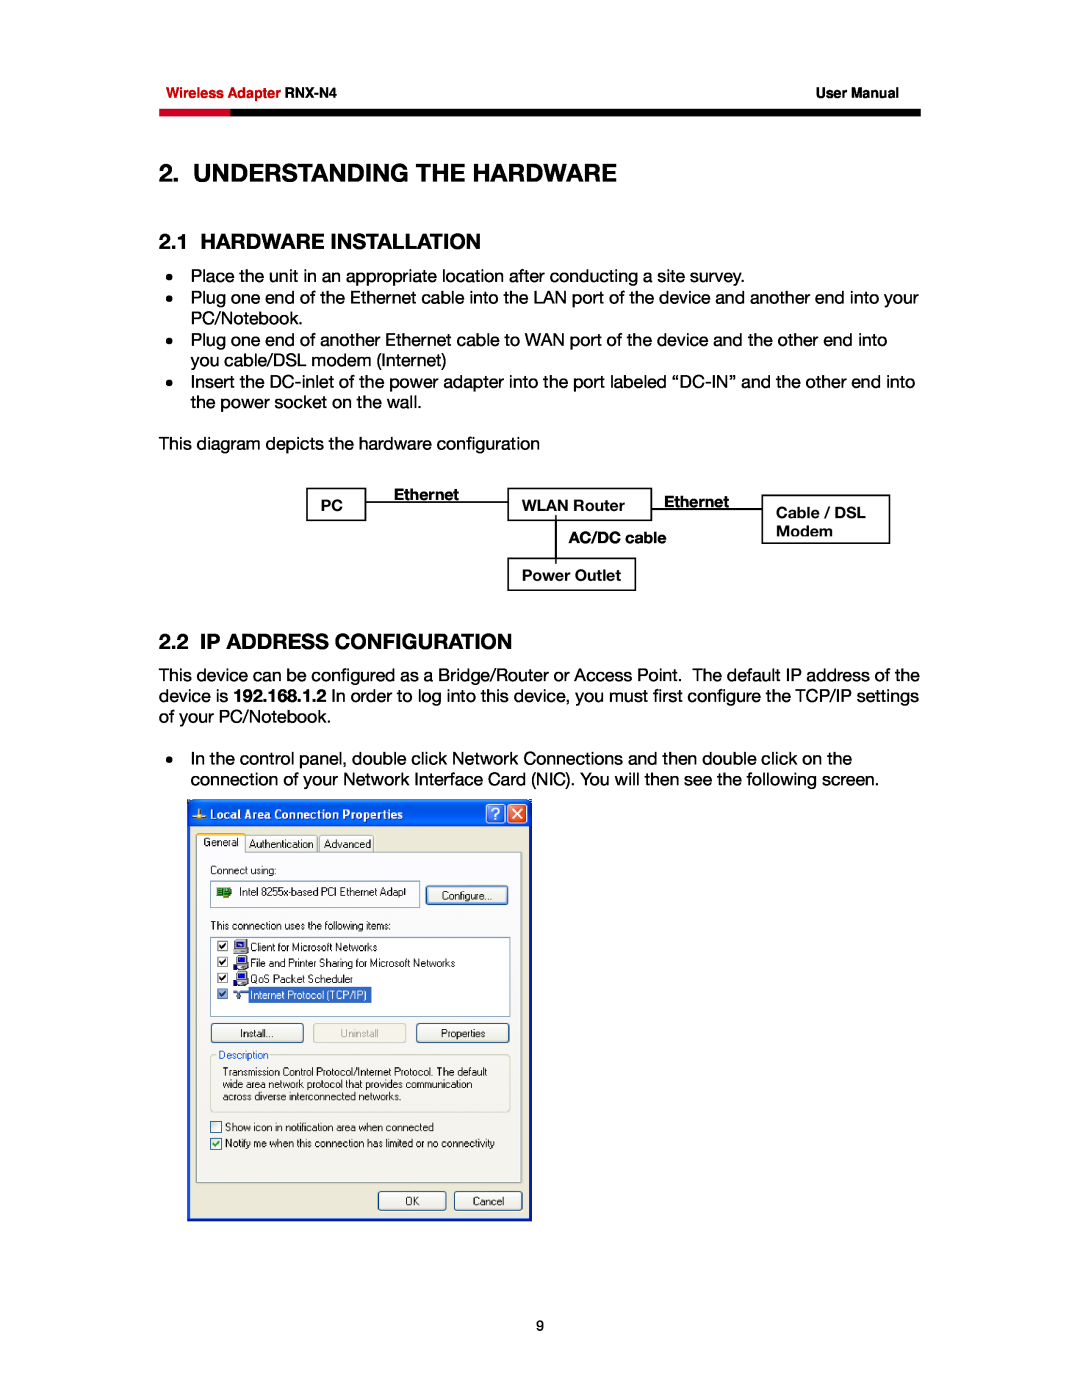 Rosewill RNX-N4 user manual Understanding The Hardware, Hardware Installation, Ip Address Configuration 